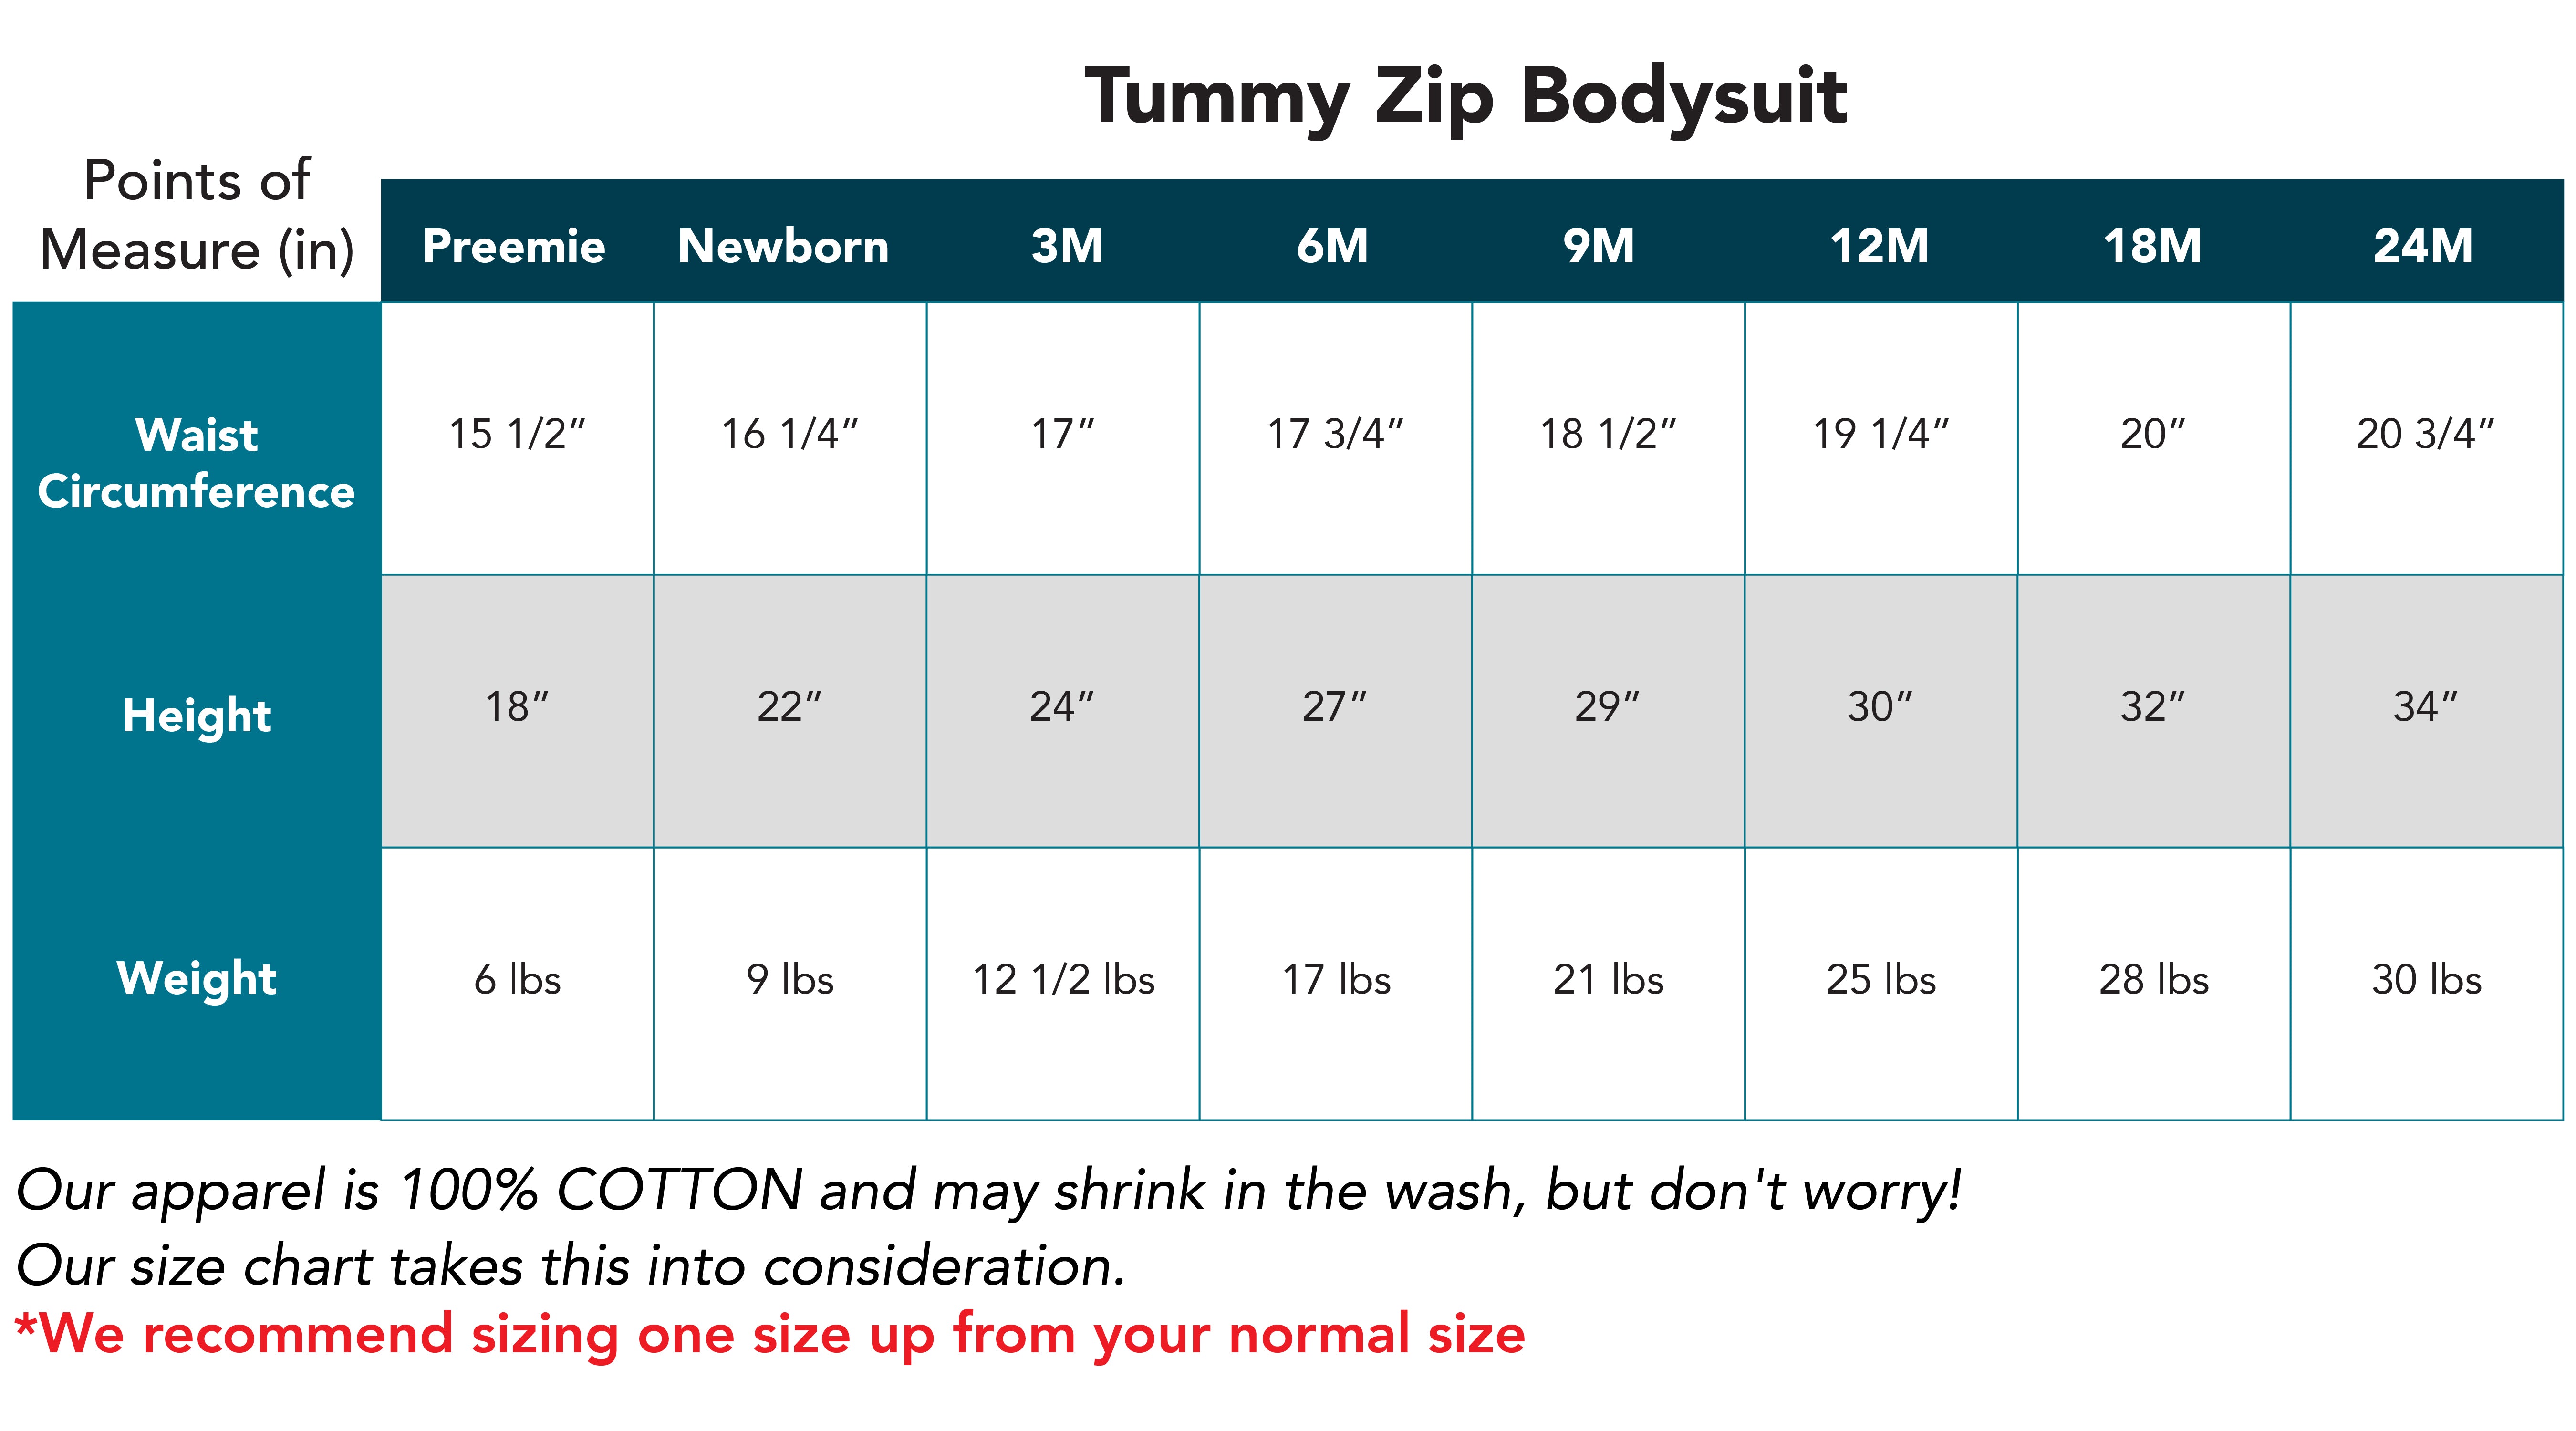 Navy Striped Duckie Short-Sleeve Tummy Zip Bodysuit | Preemie to 24M | G-Tube, Ostomy, Catheter, NICU/PICU, Port-friendly adaptive clothing